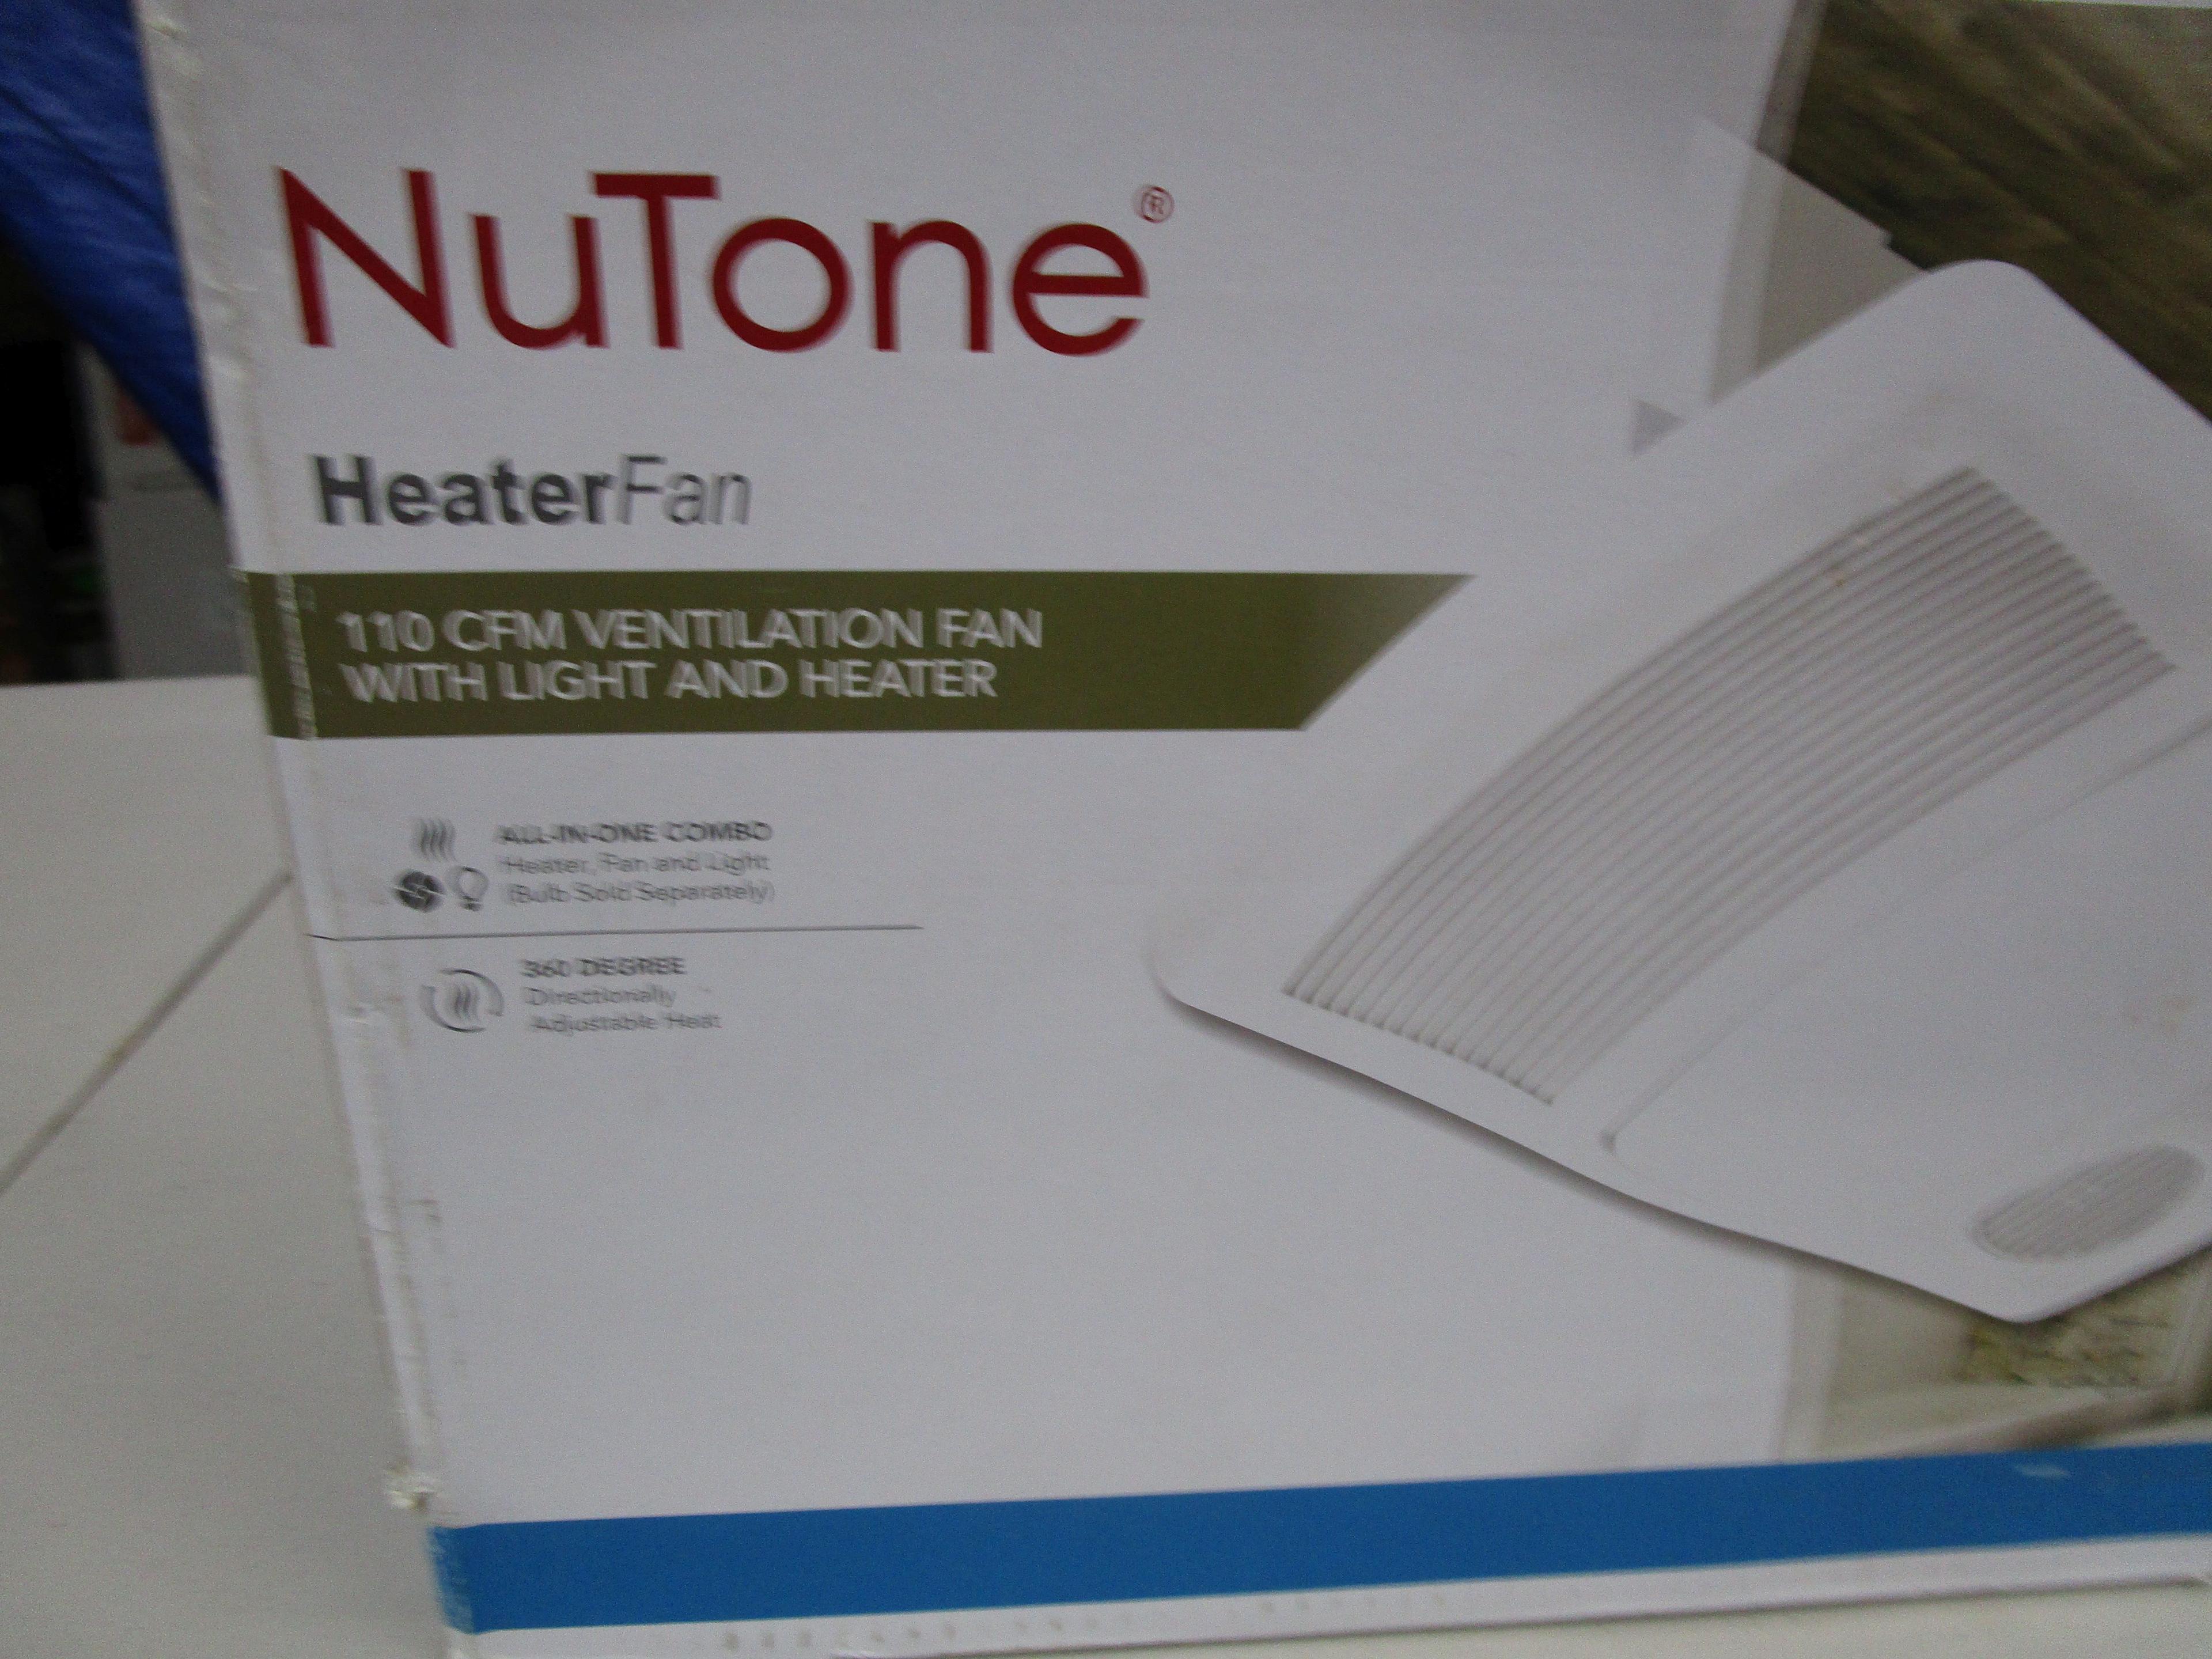 NuTone Heater Fan 110 CFM Ventilation Fan with Light and Heater (NEW) 110